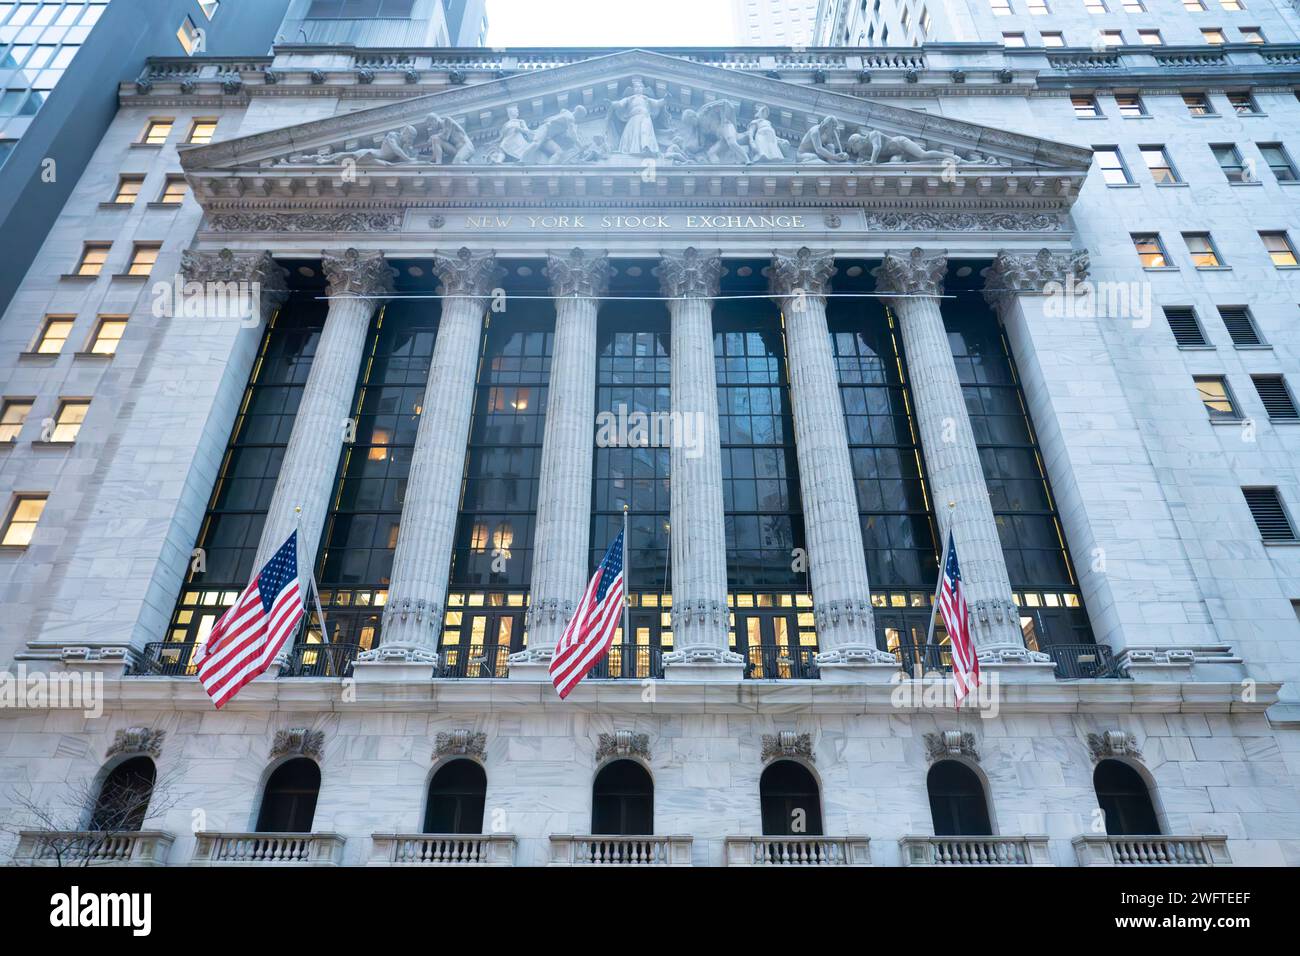 The New York Stock Exchange in New York City. Photo date: Friday, January 26, 2024. Photo: Richard Gray/Alamy Stock Photo